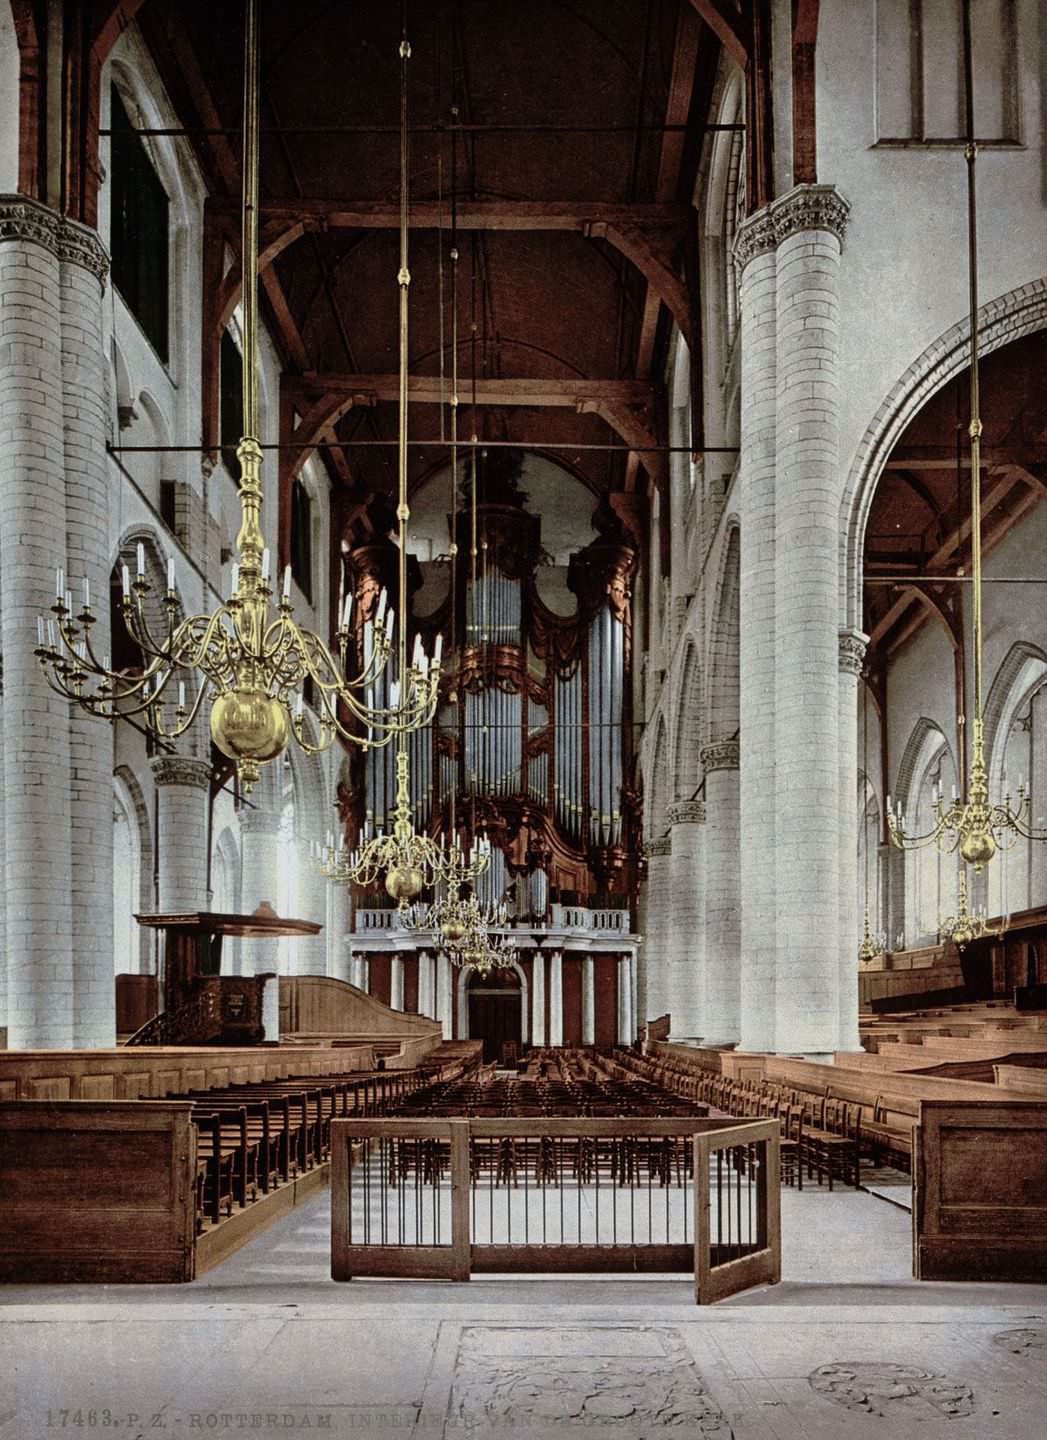 Cathedral interior, Rotterdam.